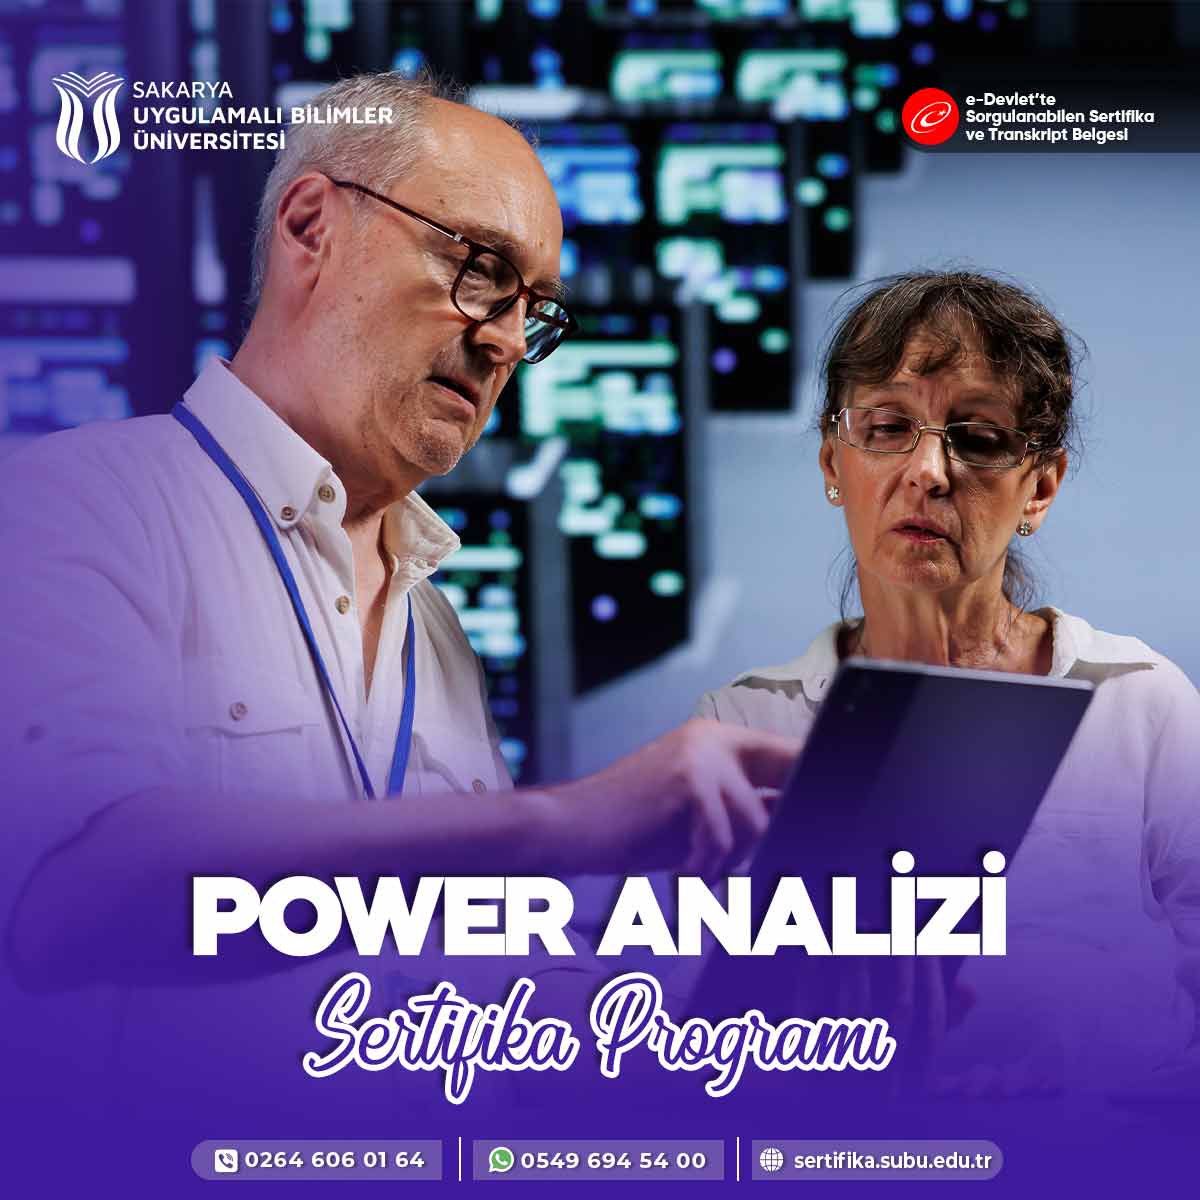 Power Analizi Sertifika Programı